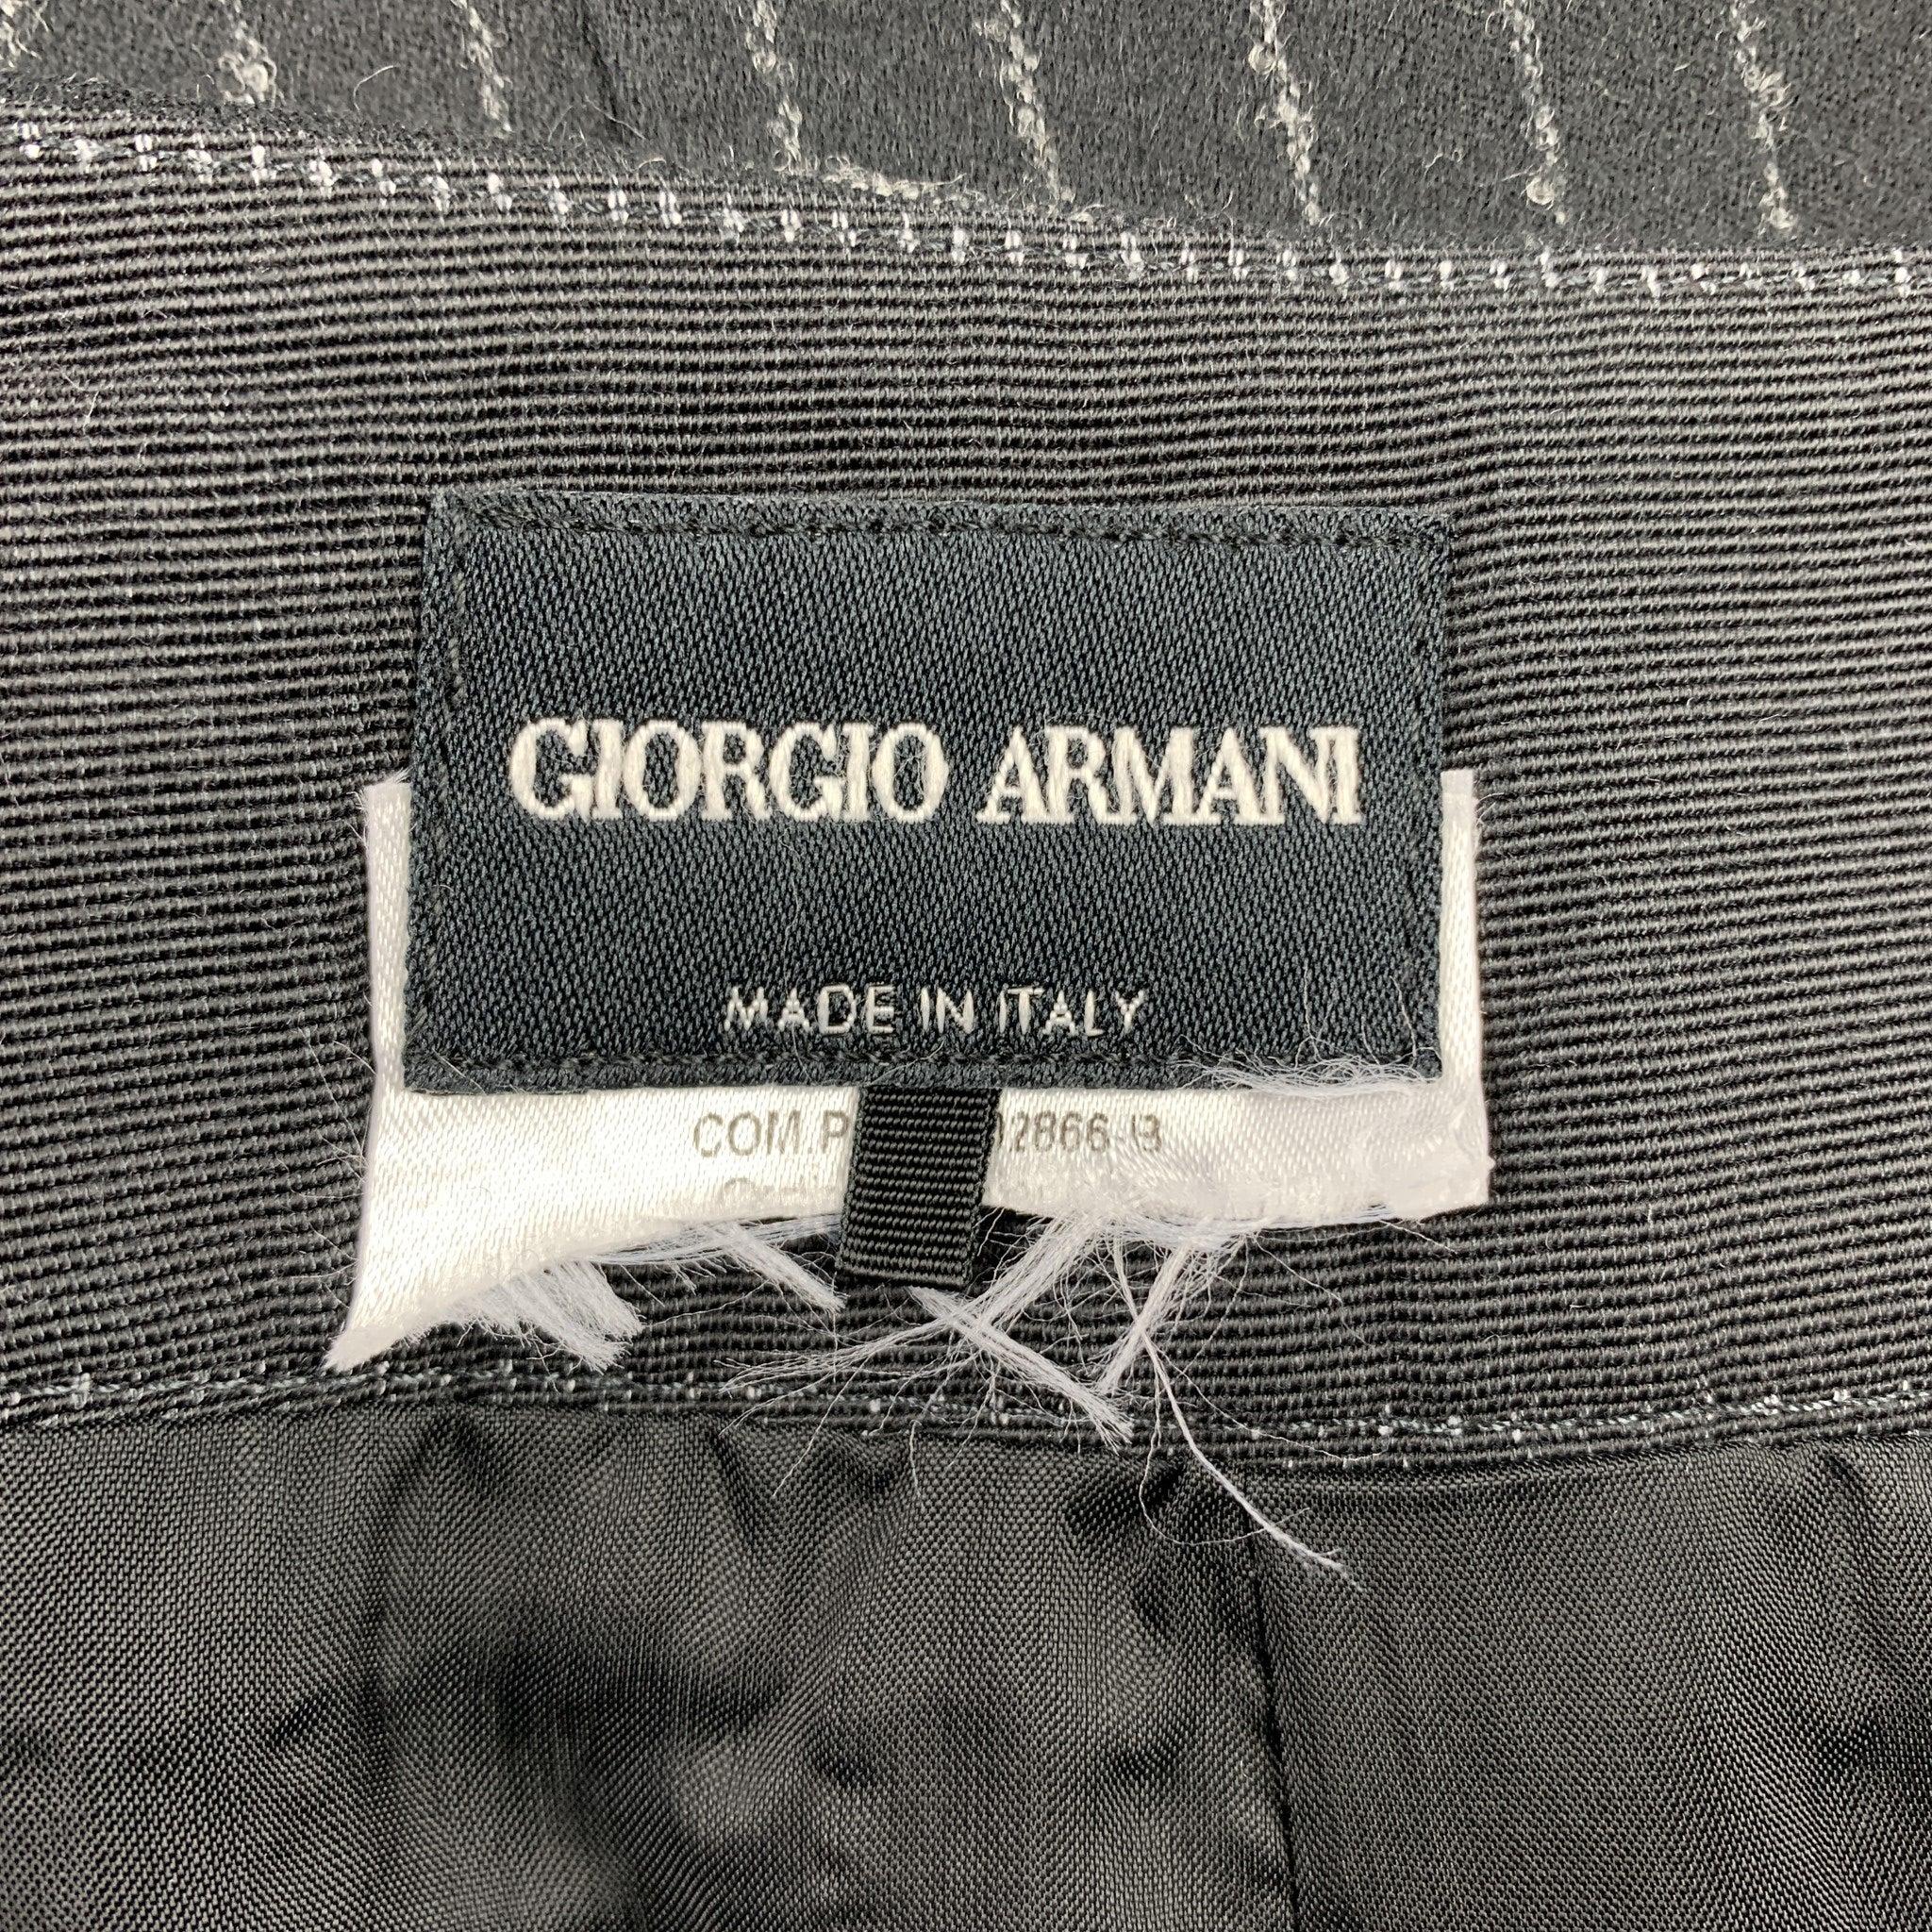 Women's GIORGIO ARMANI Size 4 Black & Grey Pinstripe Pencil Skirt